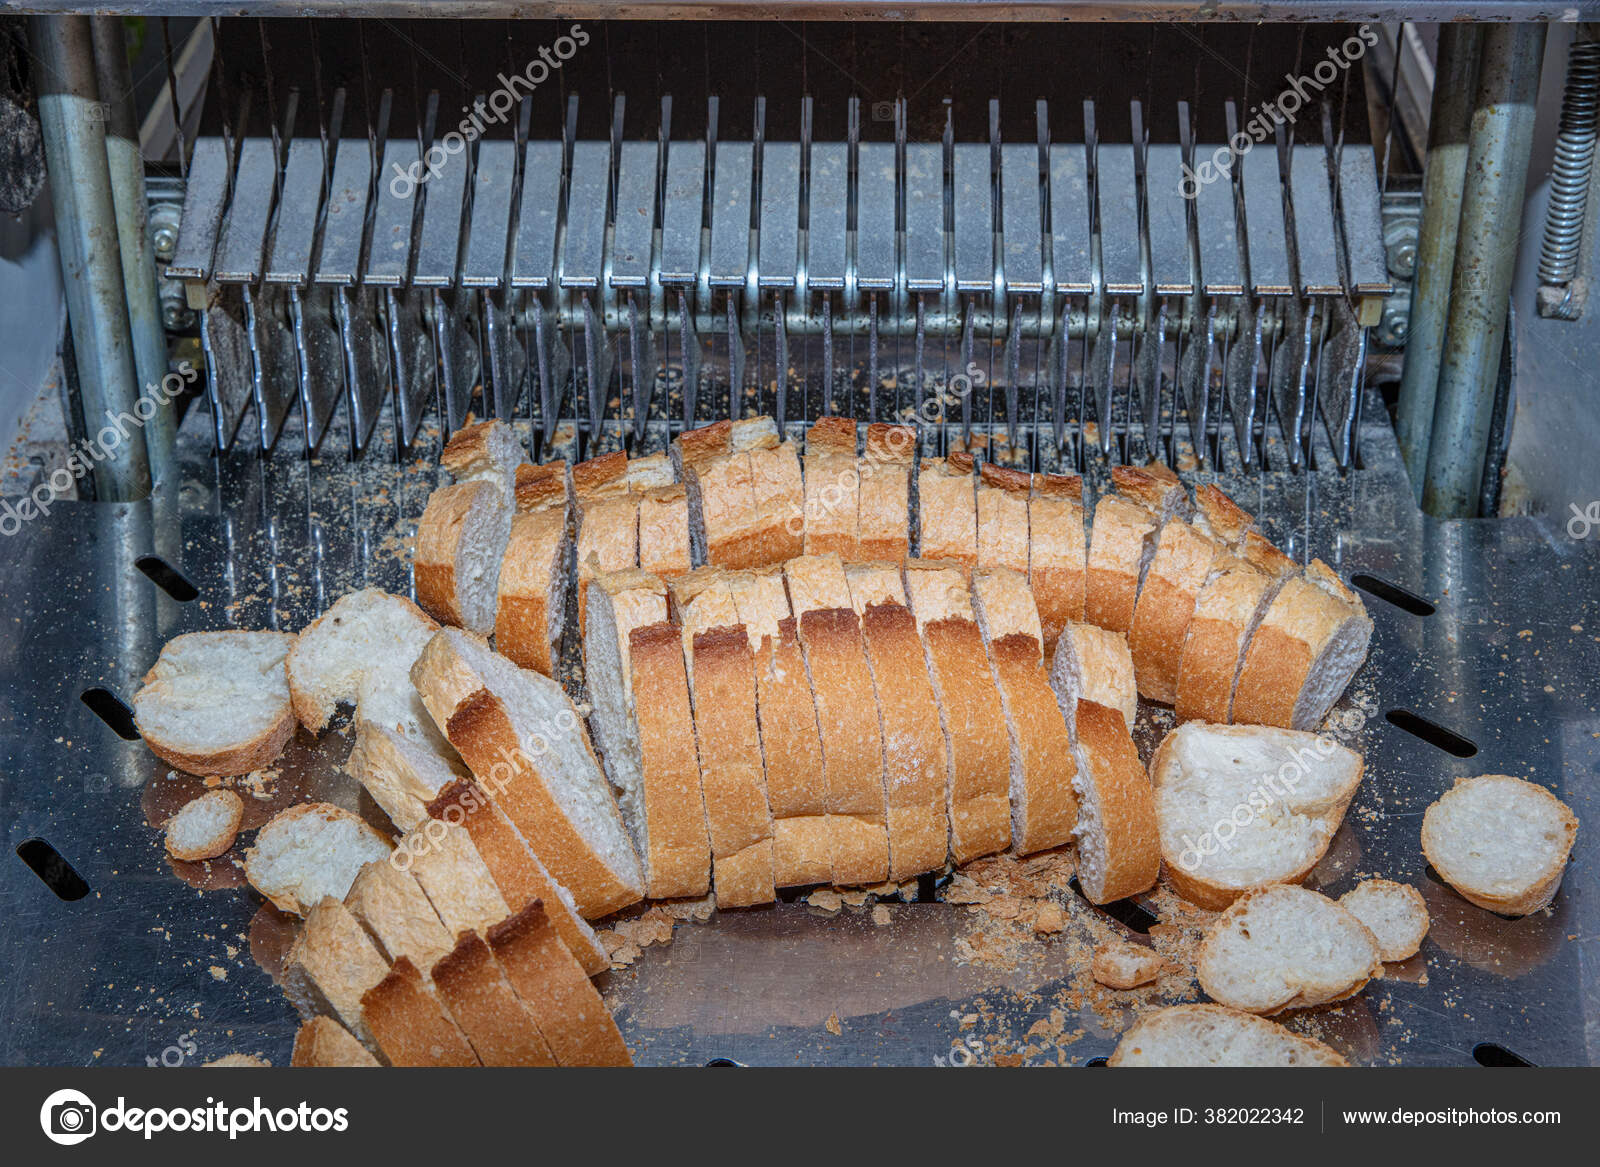 https://st4.depositphotos.com/36716422/38202/i/1600/depositphotos_382022342-stock-photo-sliced-bread-cutting-machine-industrial.jpg